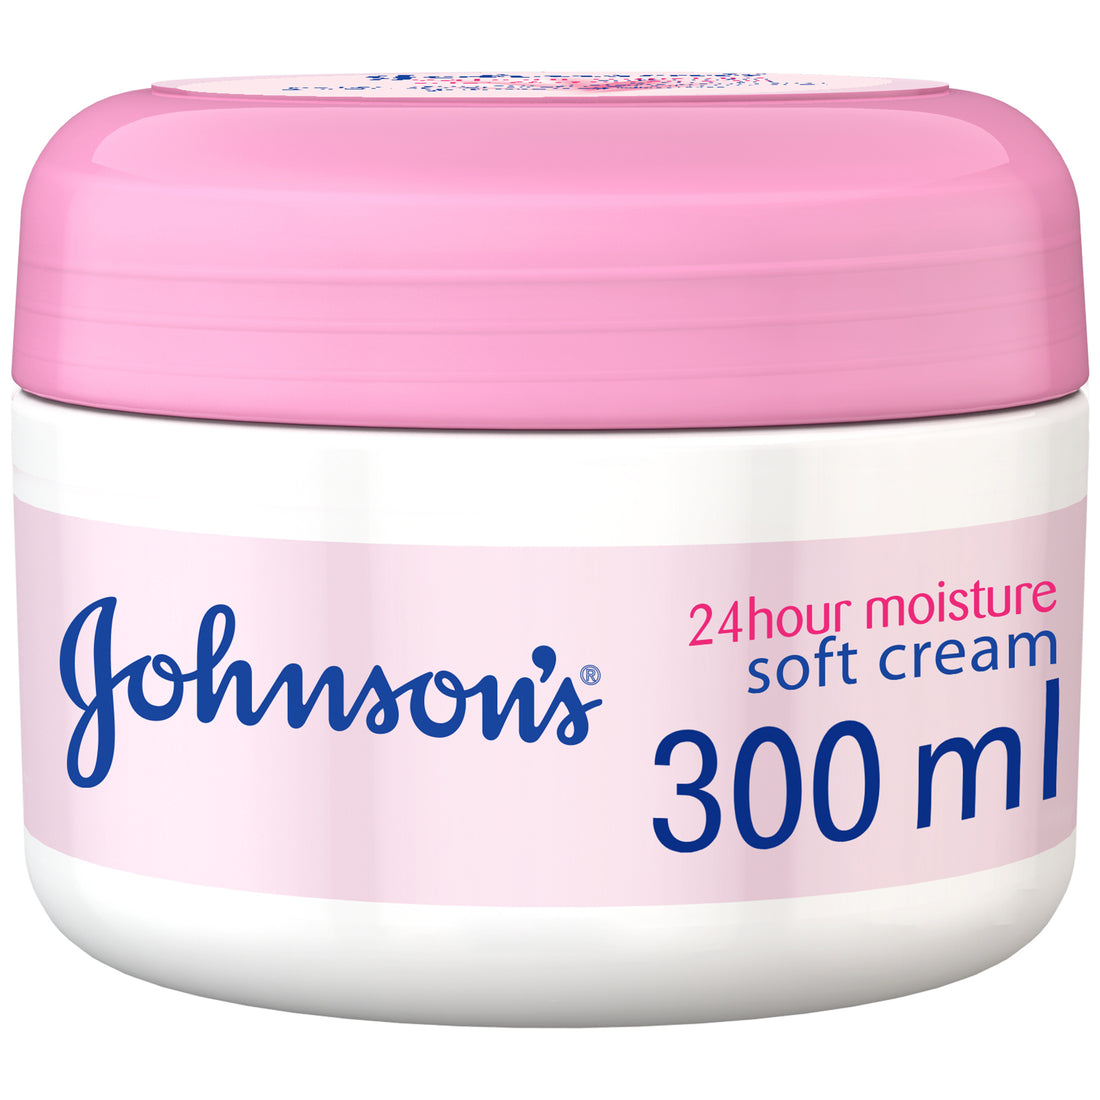 JOHNSON’S Body Cream, 24 HOUR Moisture, Soft, 300ml